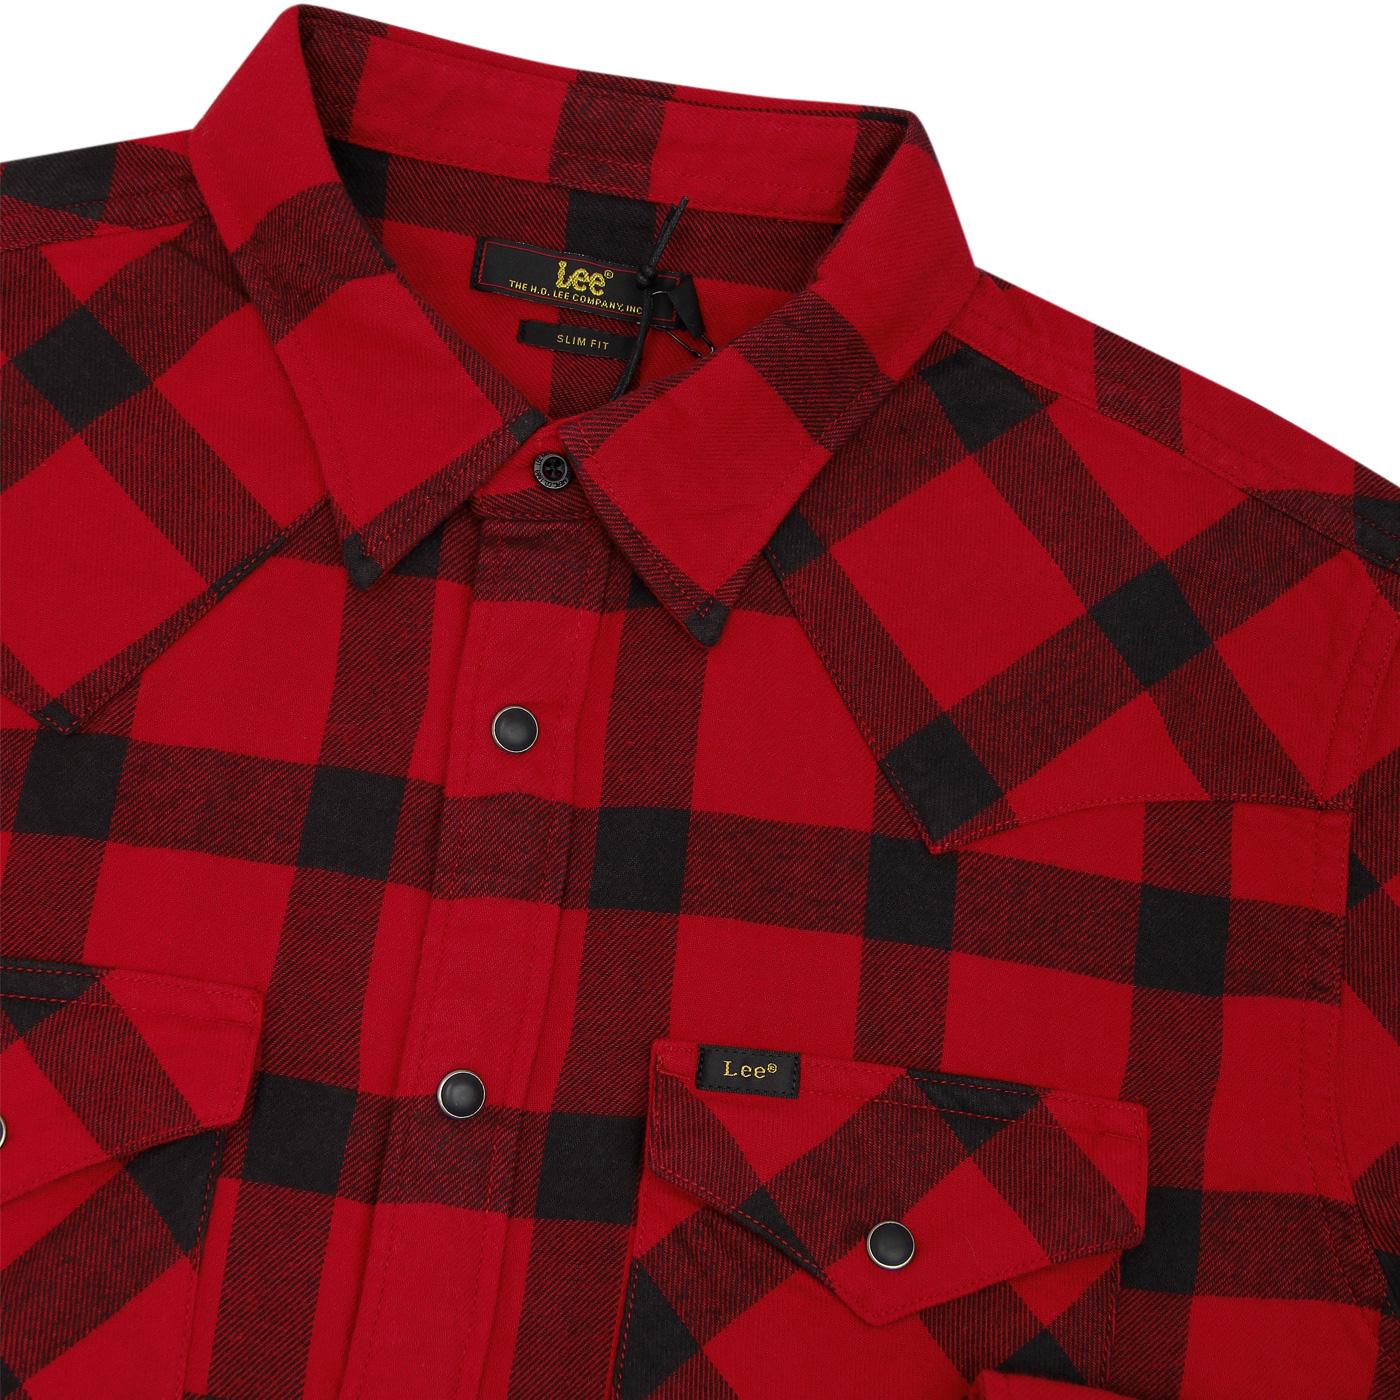 LEE Men's Retro Mod Lumberjack Check Western Shirt in Red